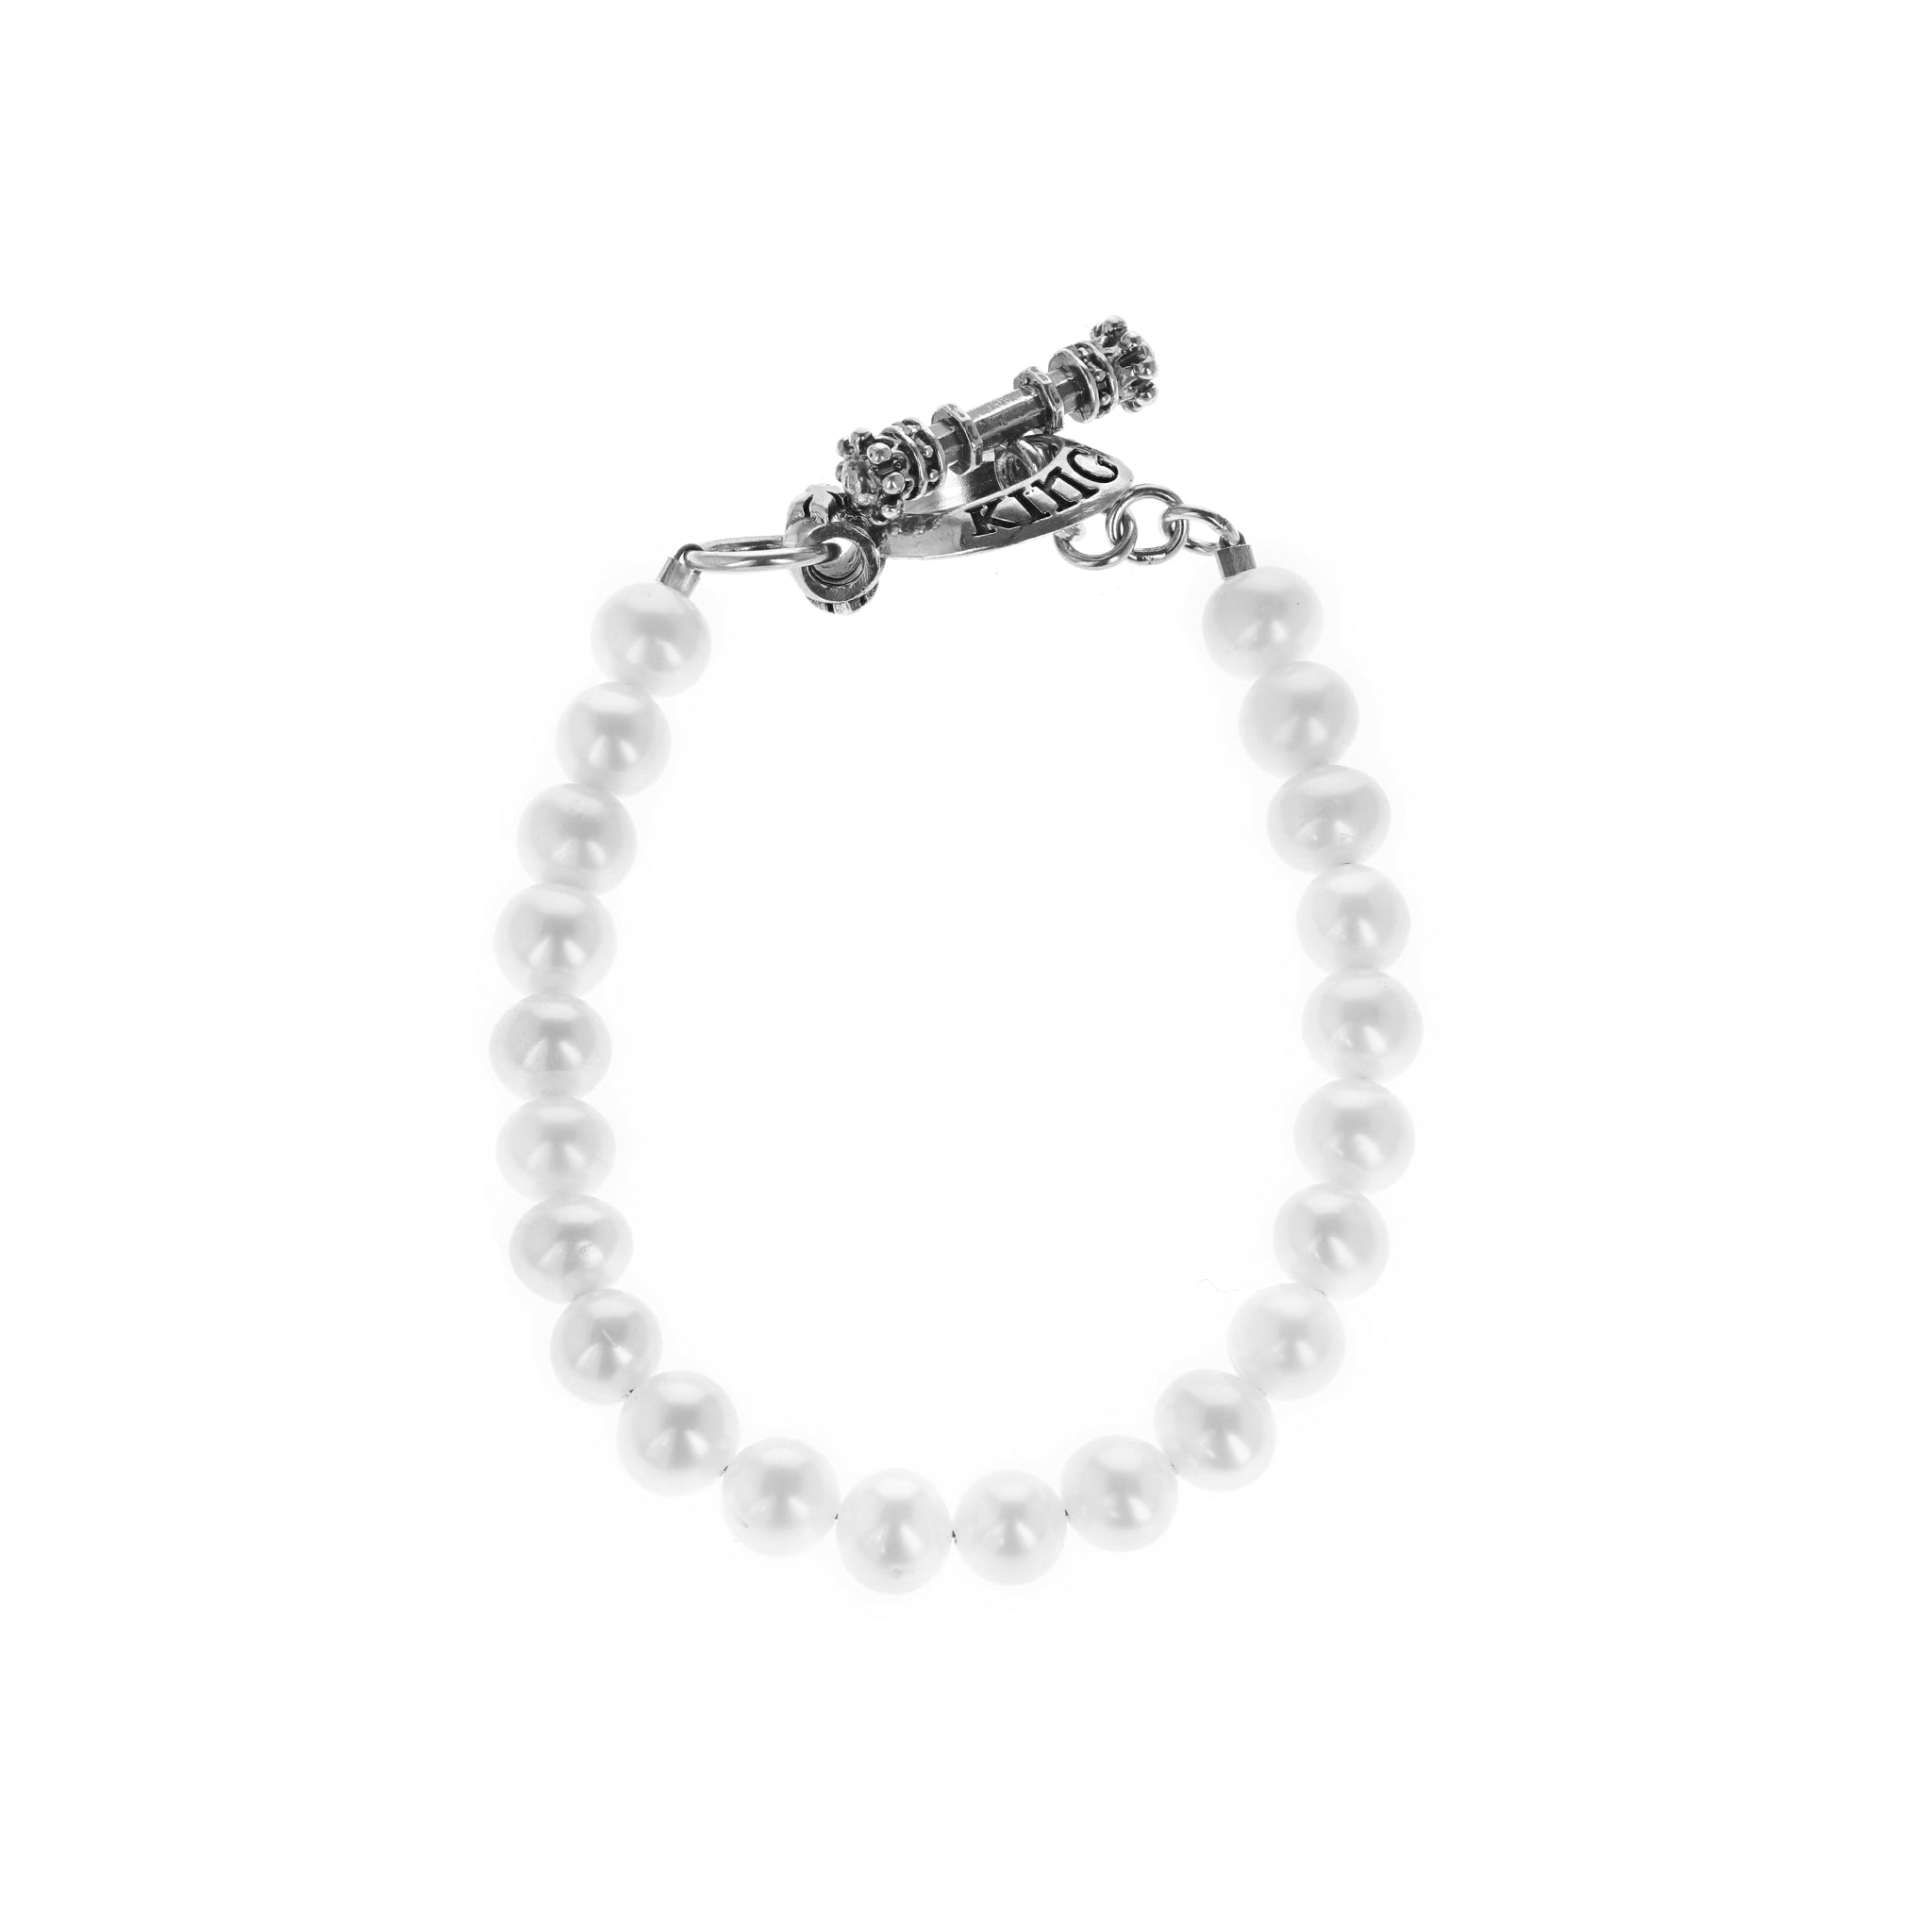 8mm White Coral Beaded Bracelet w/ Logo Ring | M - King Baby Studio